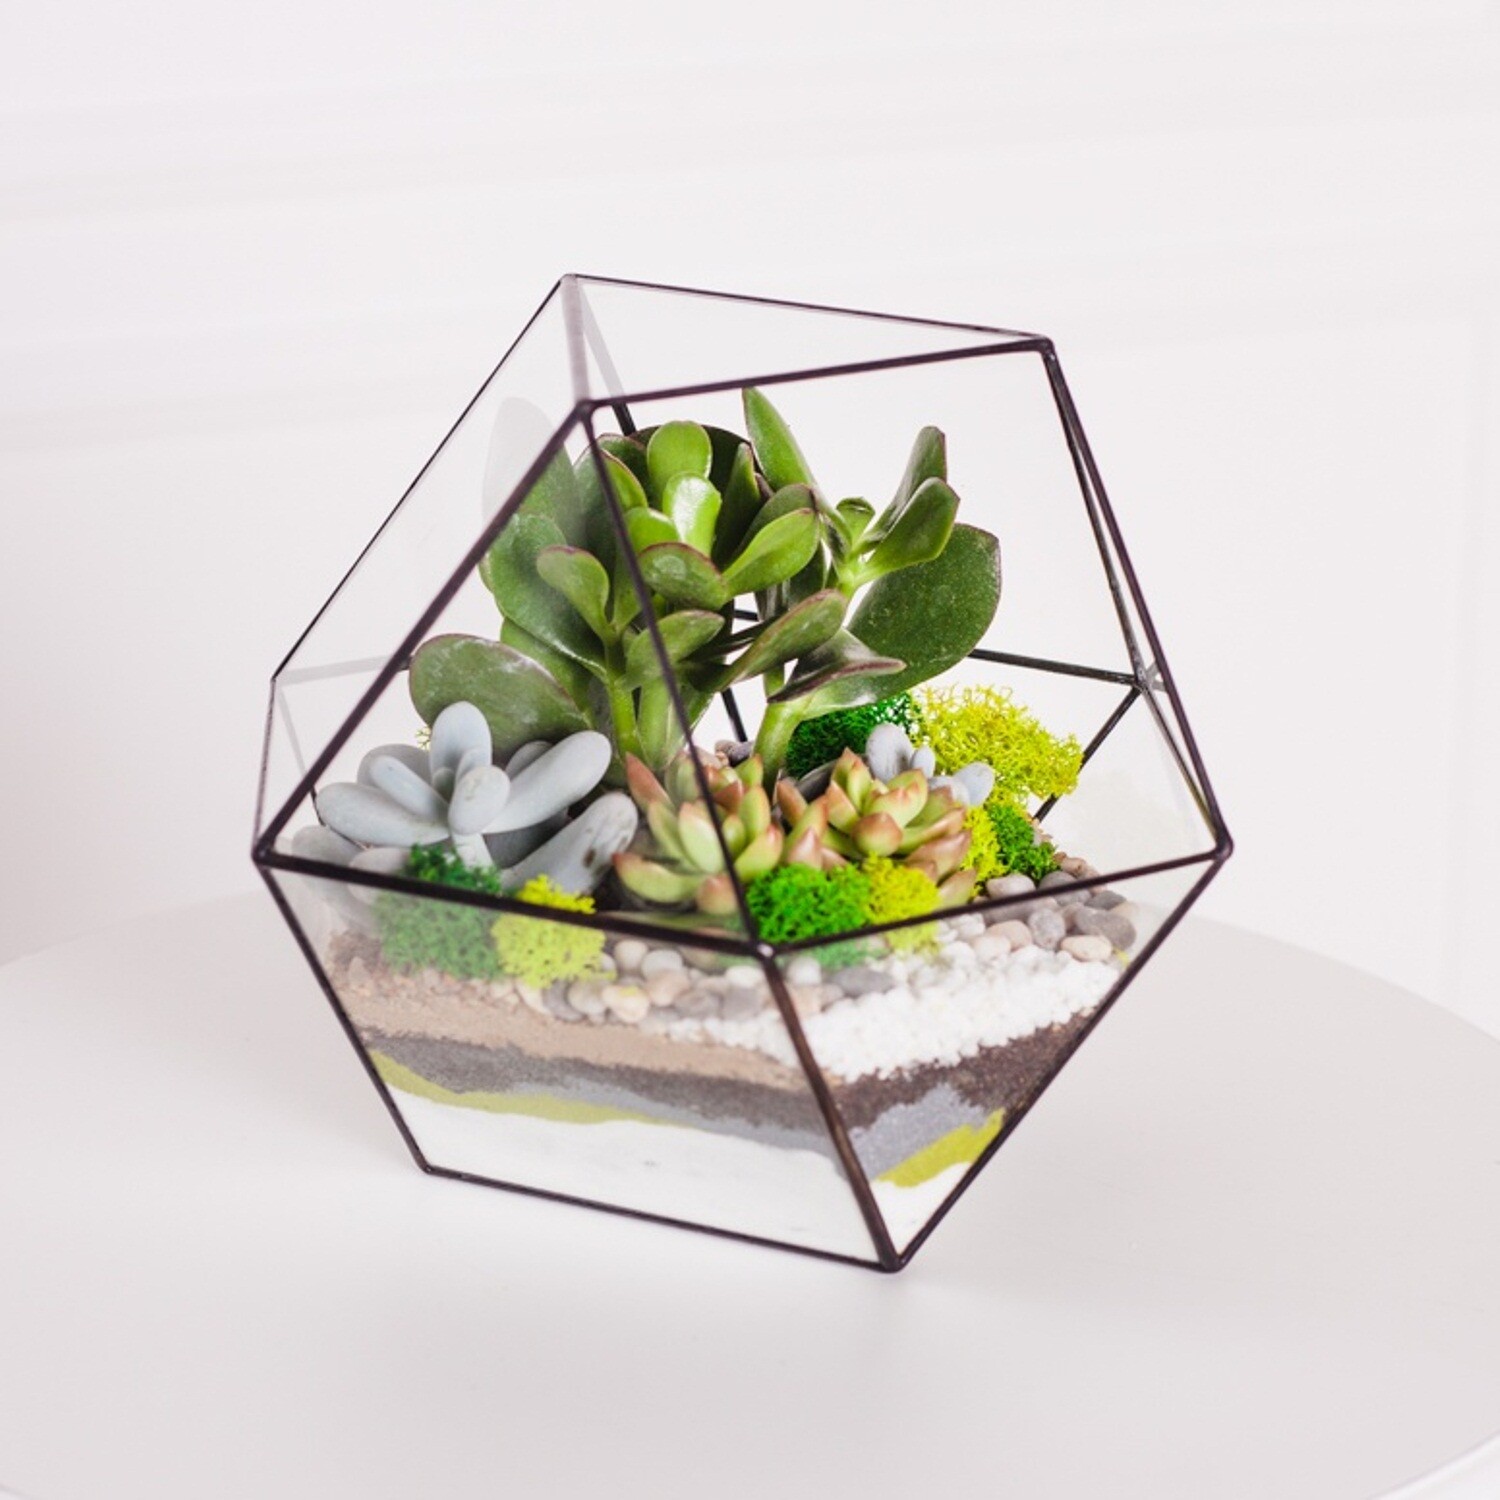 геометрический флорариум кубоктаэдр, купить флорариум екатеринбург